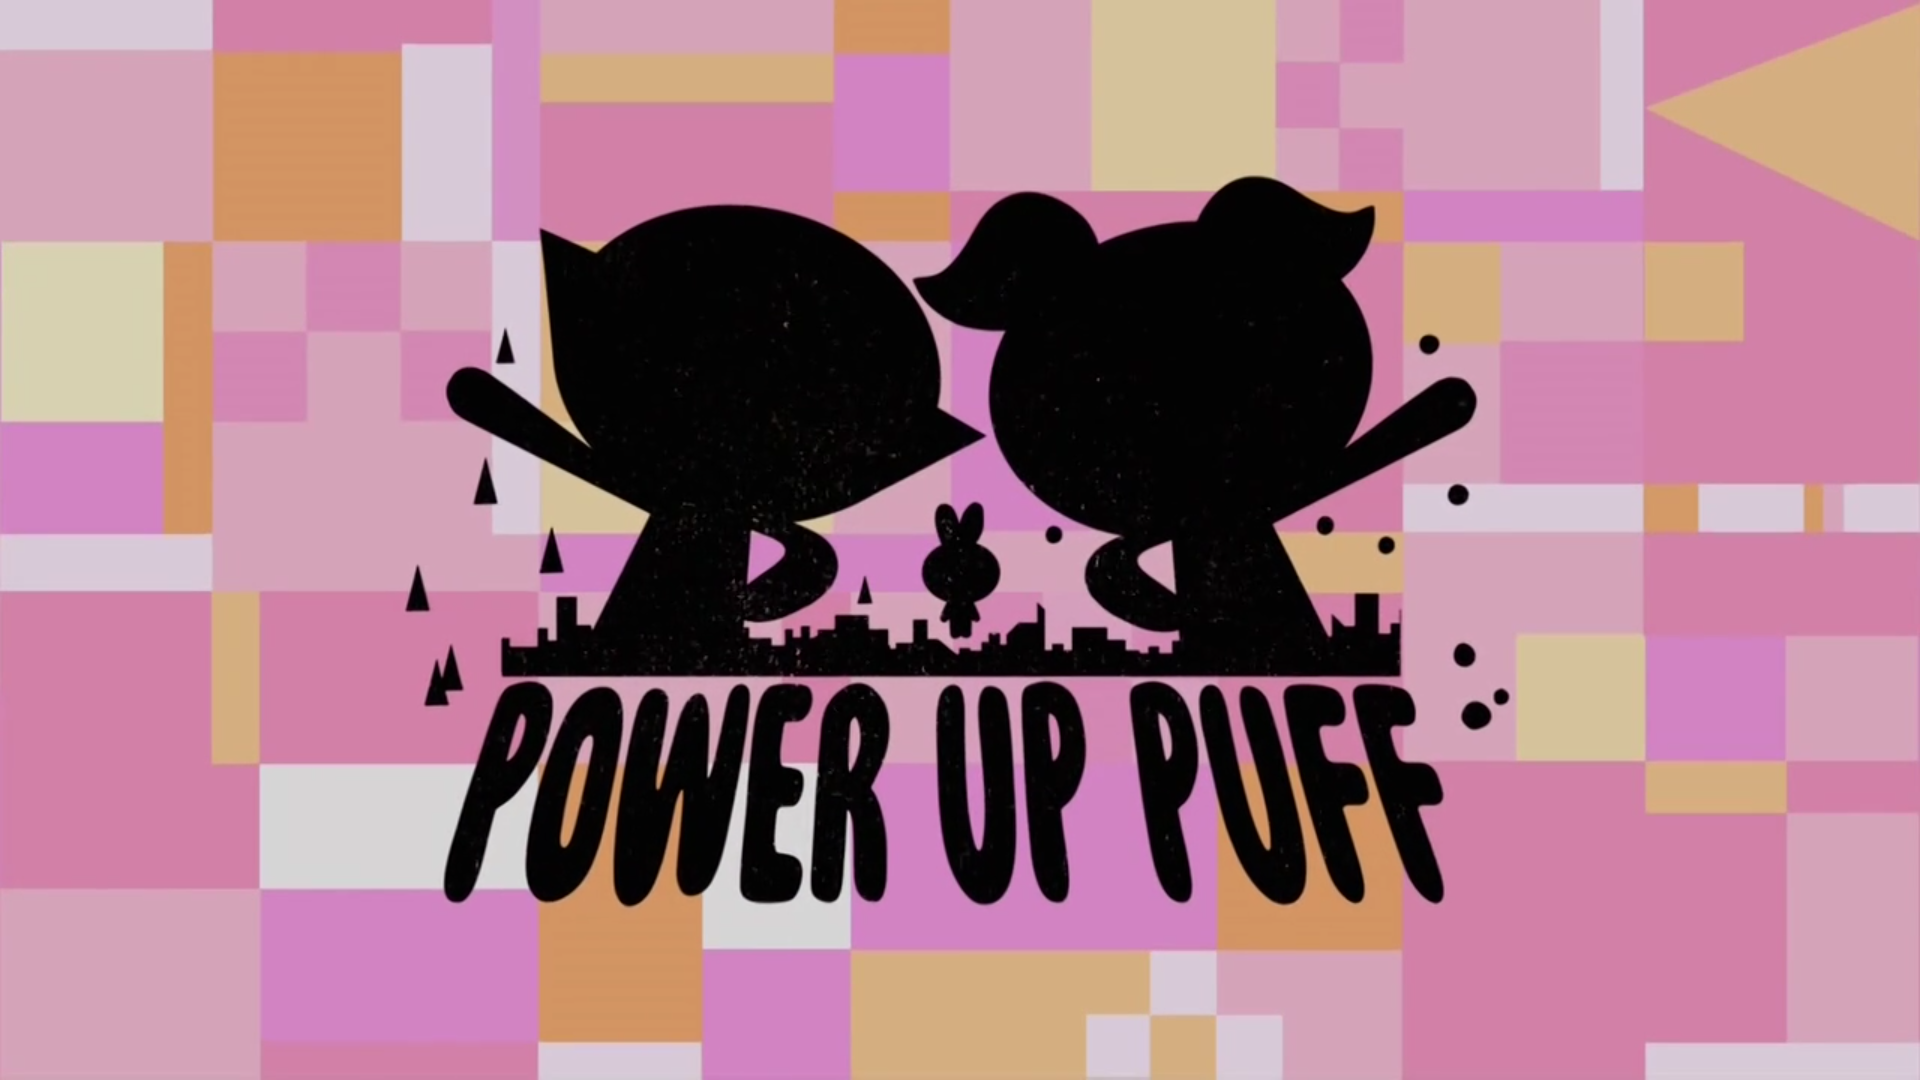 10 серия 1 сезона Power-Up Puff